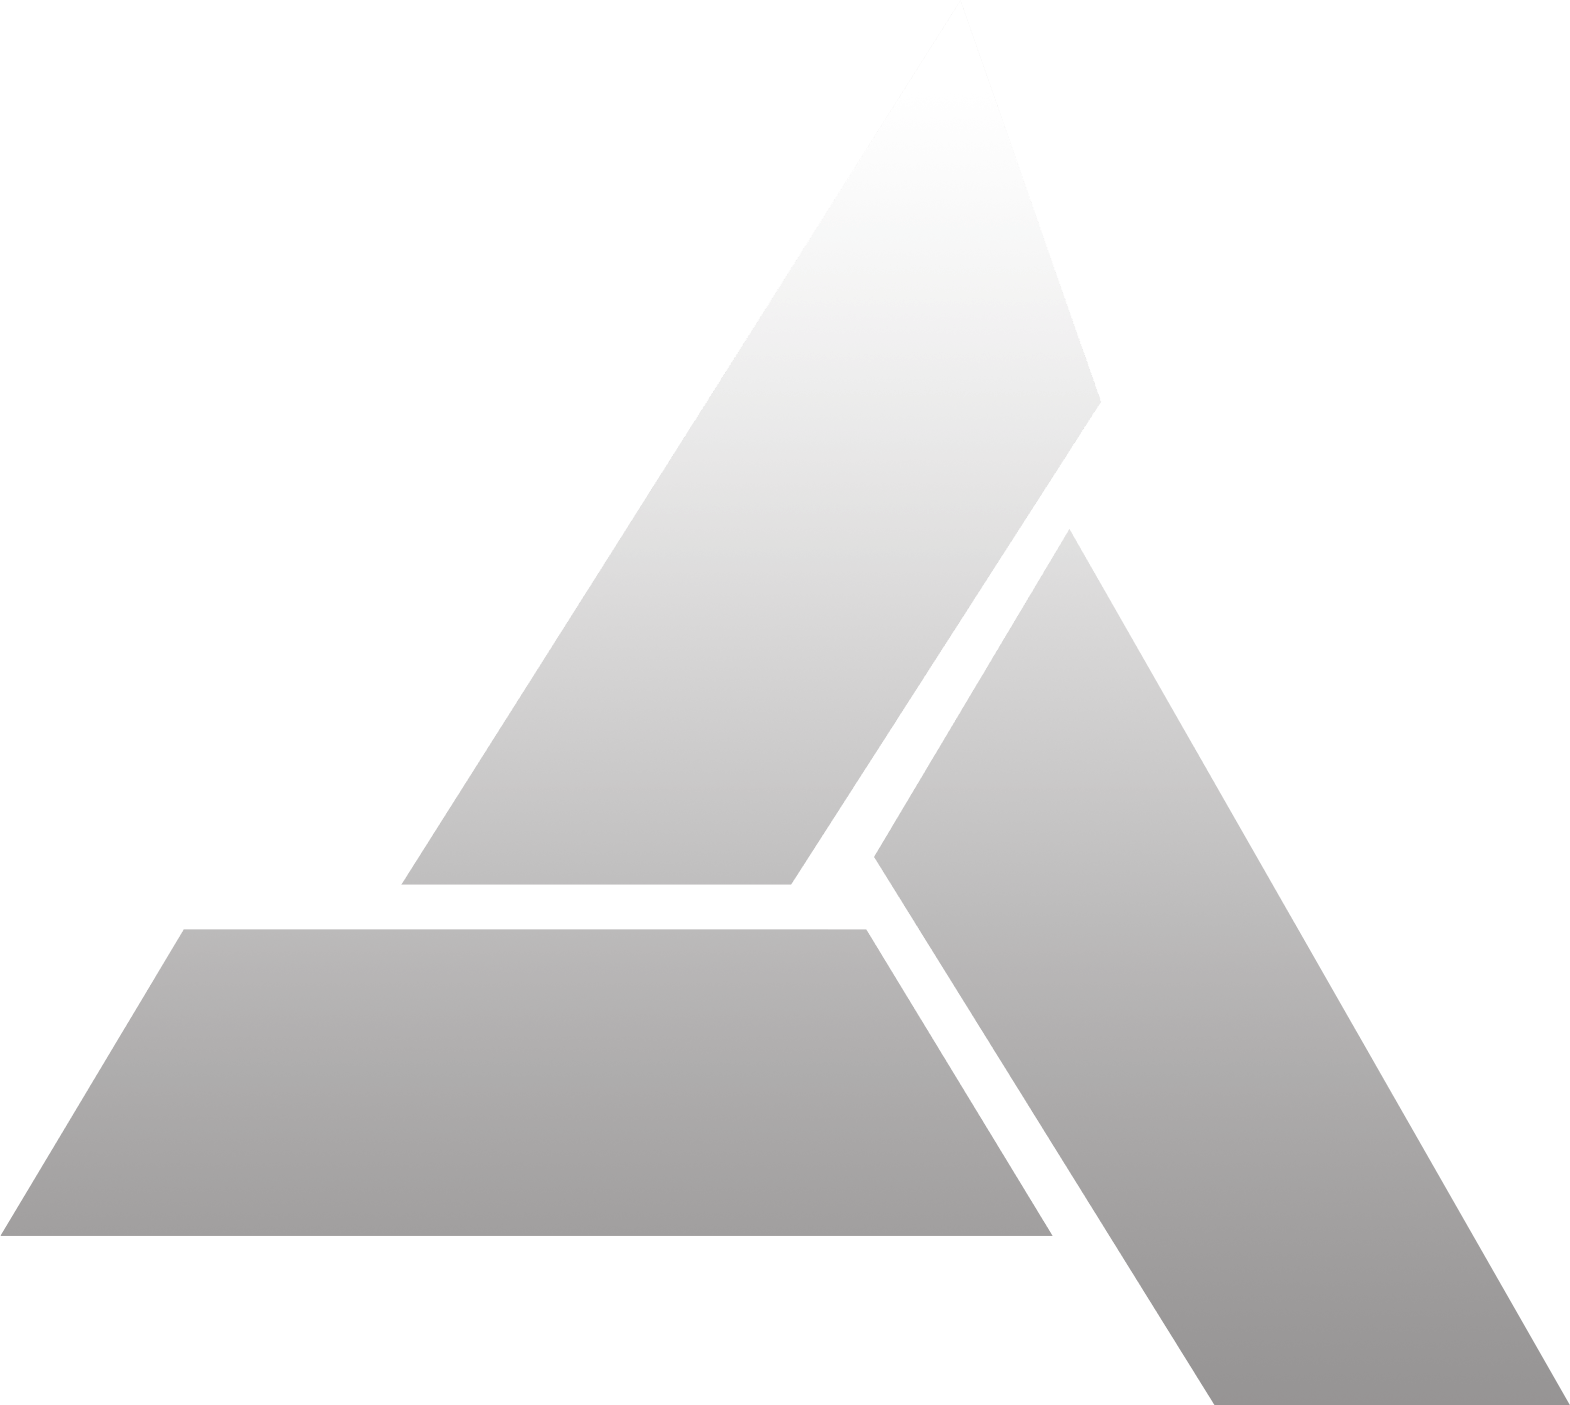 File:Agnes b logo.svg - Wikipedia